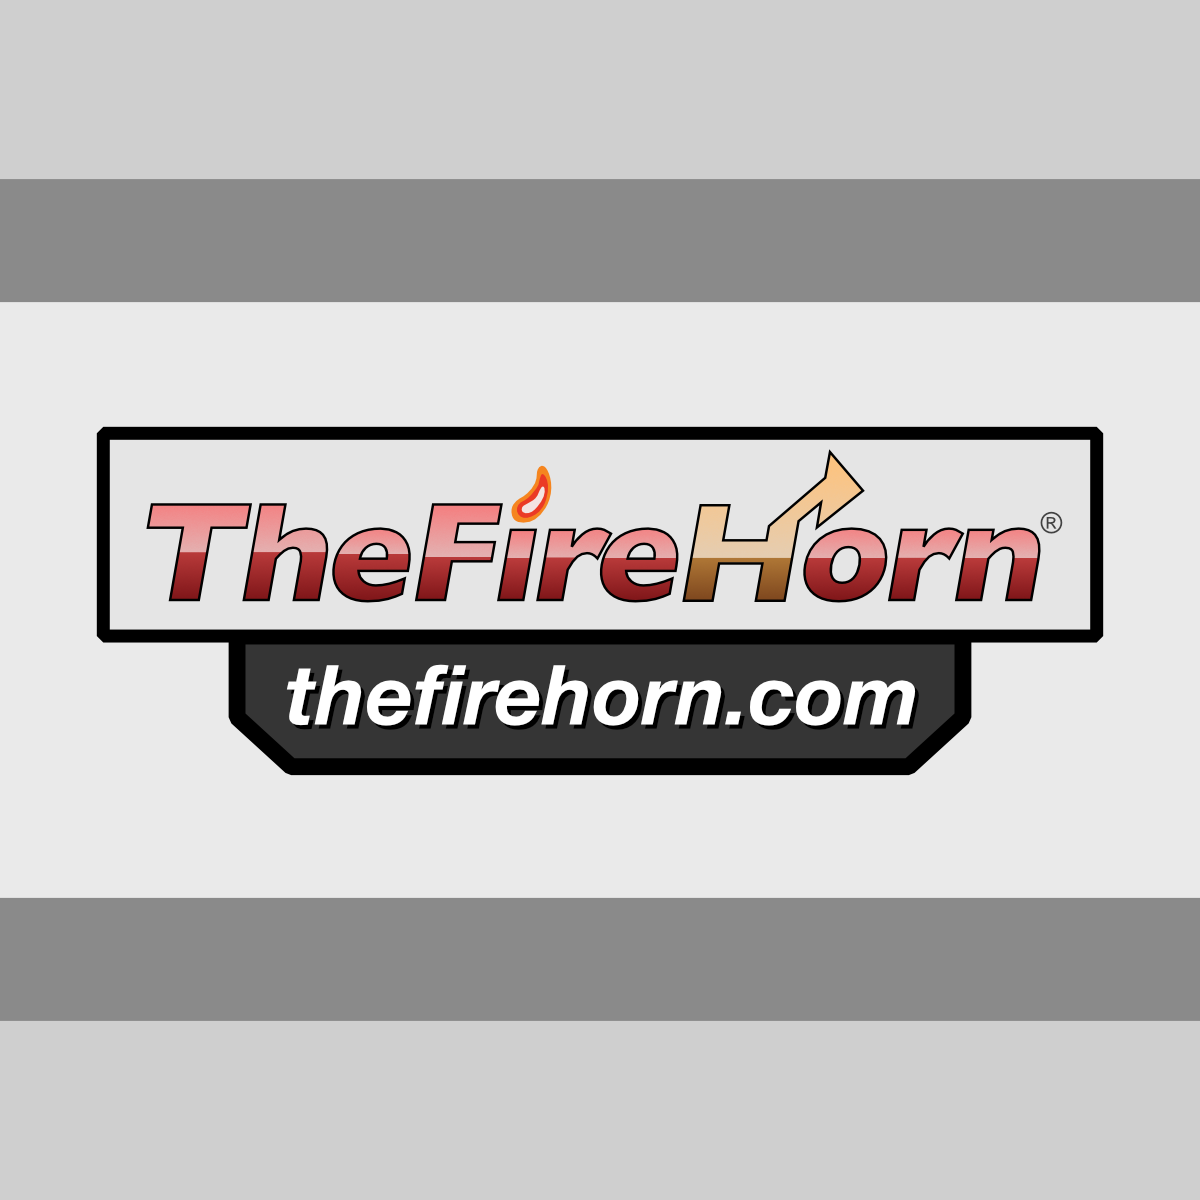 (c) Thefirehorn.com